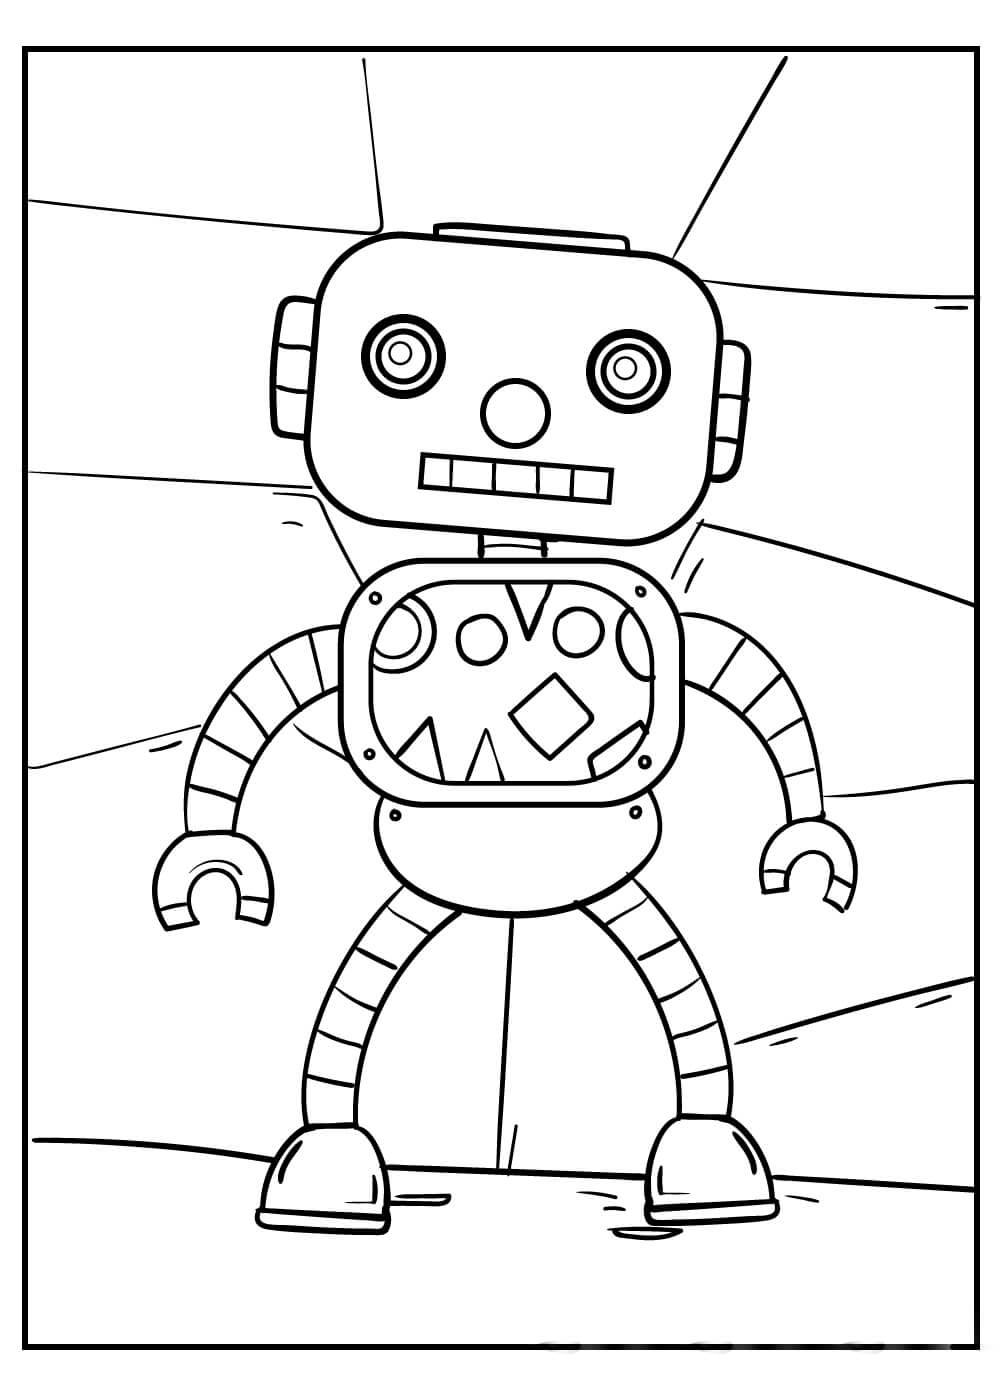 Imagenes de robots faciles de dibujar  Imagui